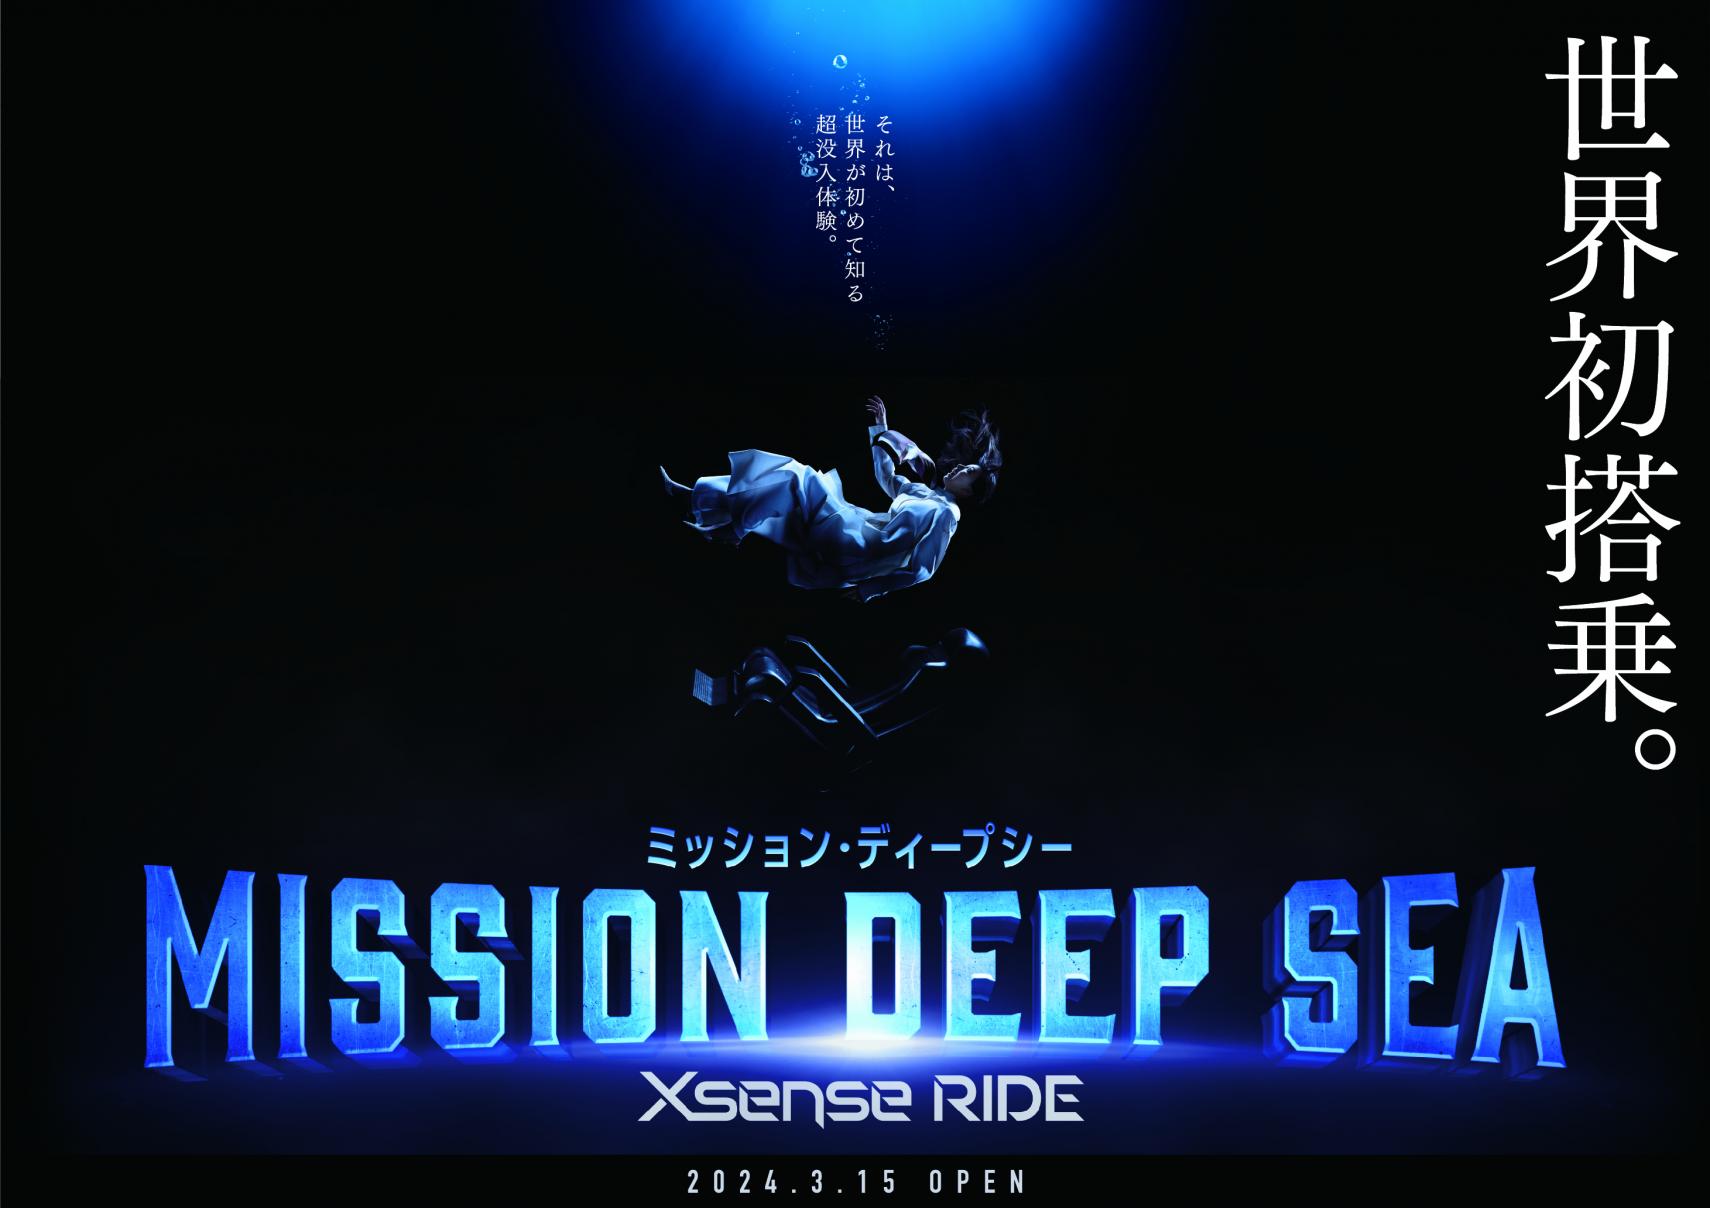 MISSION DEEP SEA Xsense RIDE-3